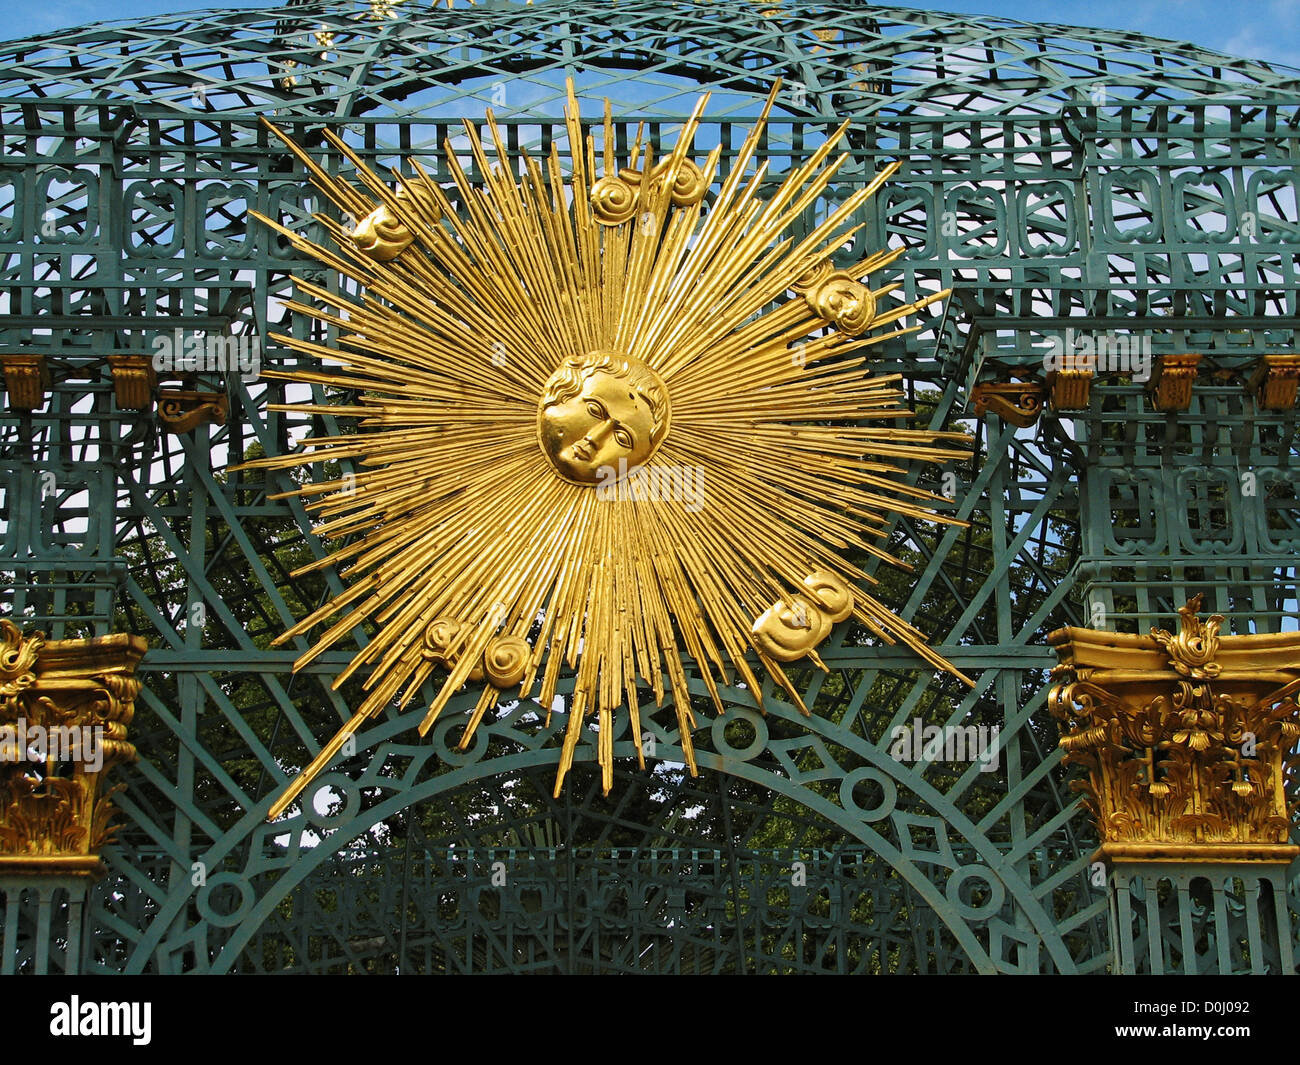 A golden sun symbol on trellised gazebo in gardens Sanssouci Palace summer residence Frederick Great in Potsdam Germany Stock Photo